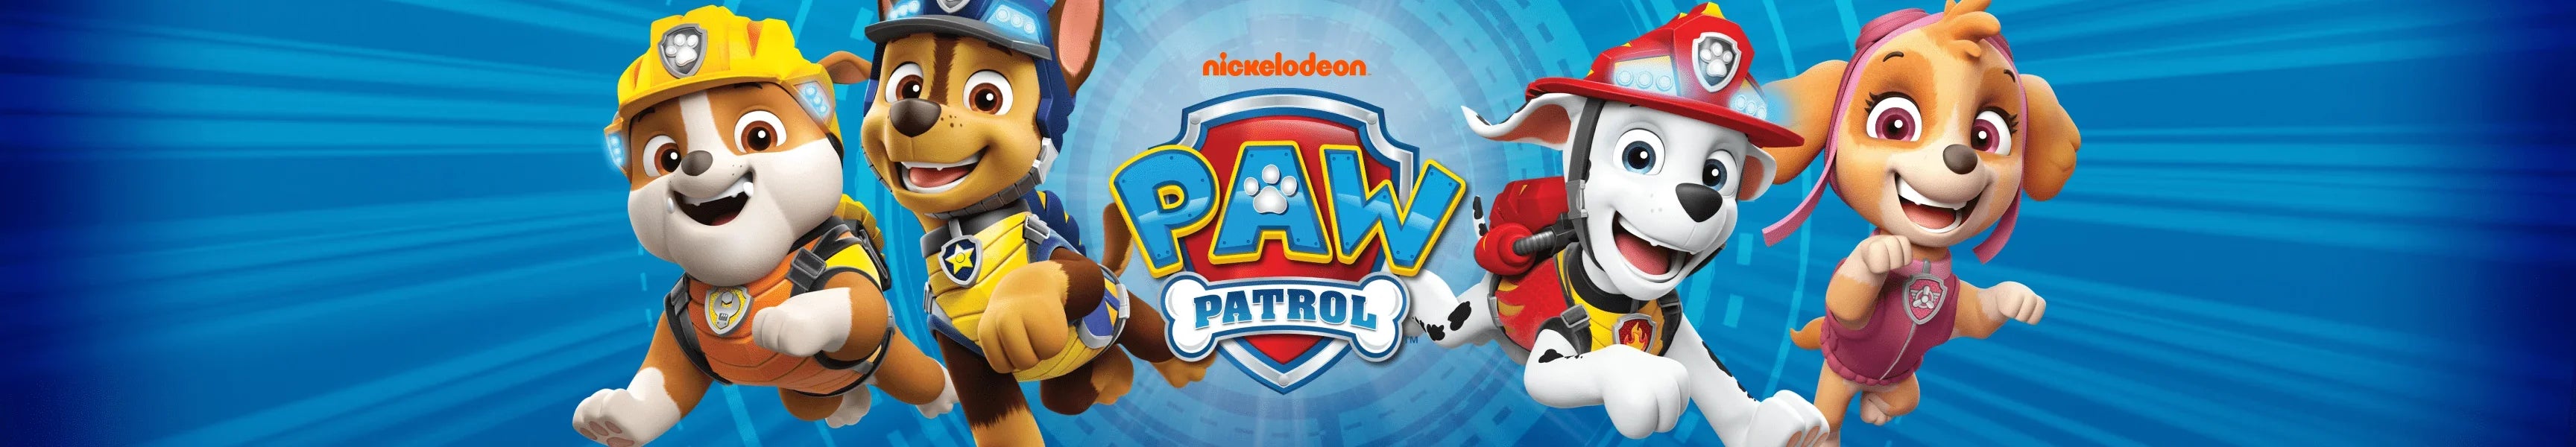 PAW Patrol Feiertag